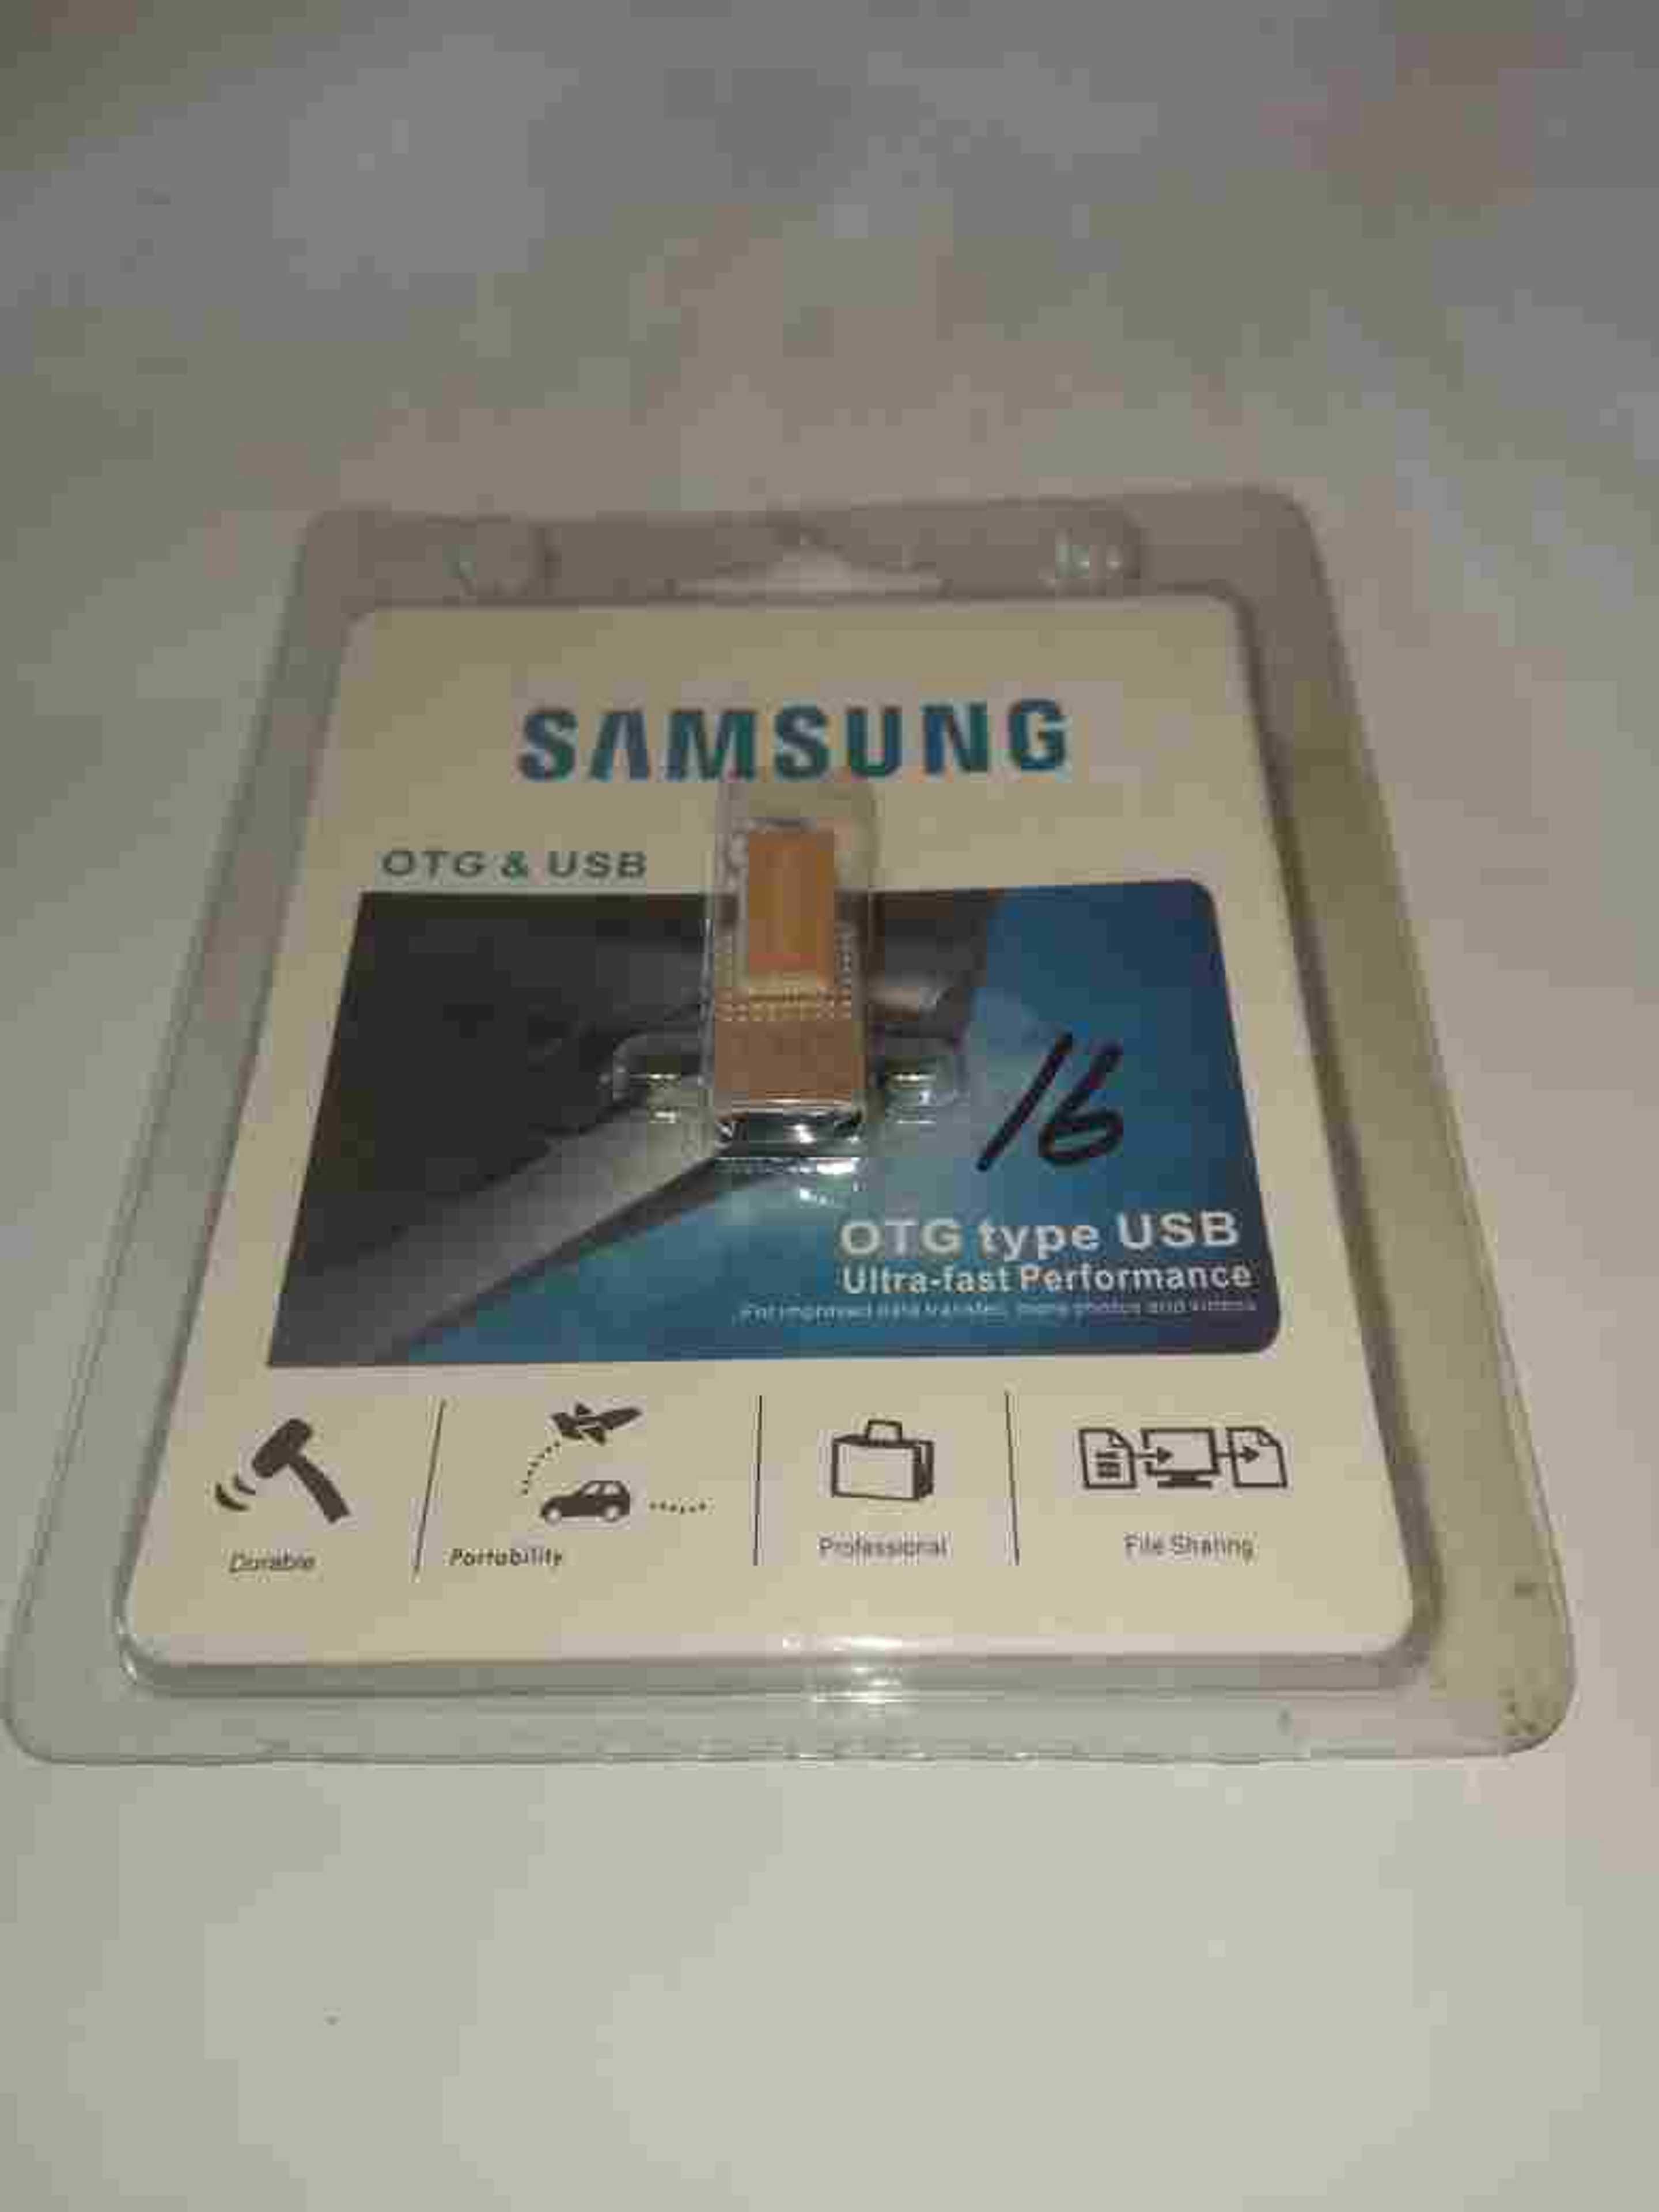 Samsung OTG & USB